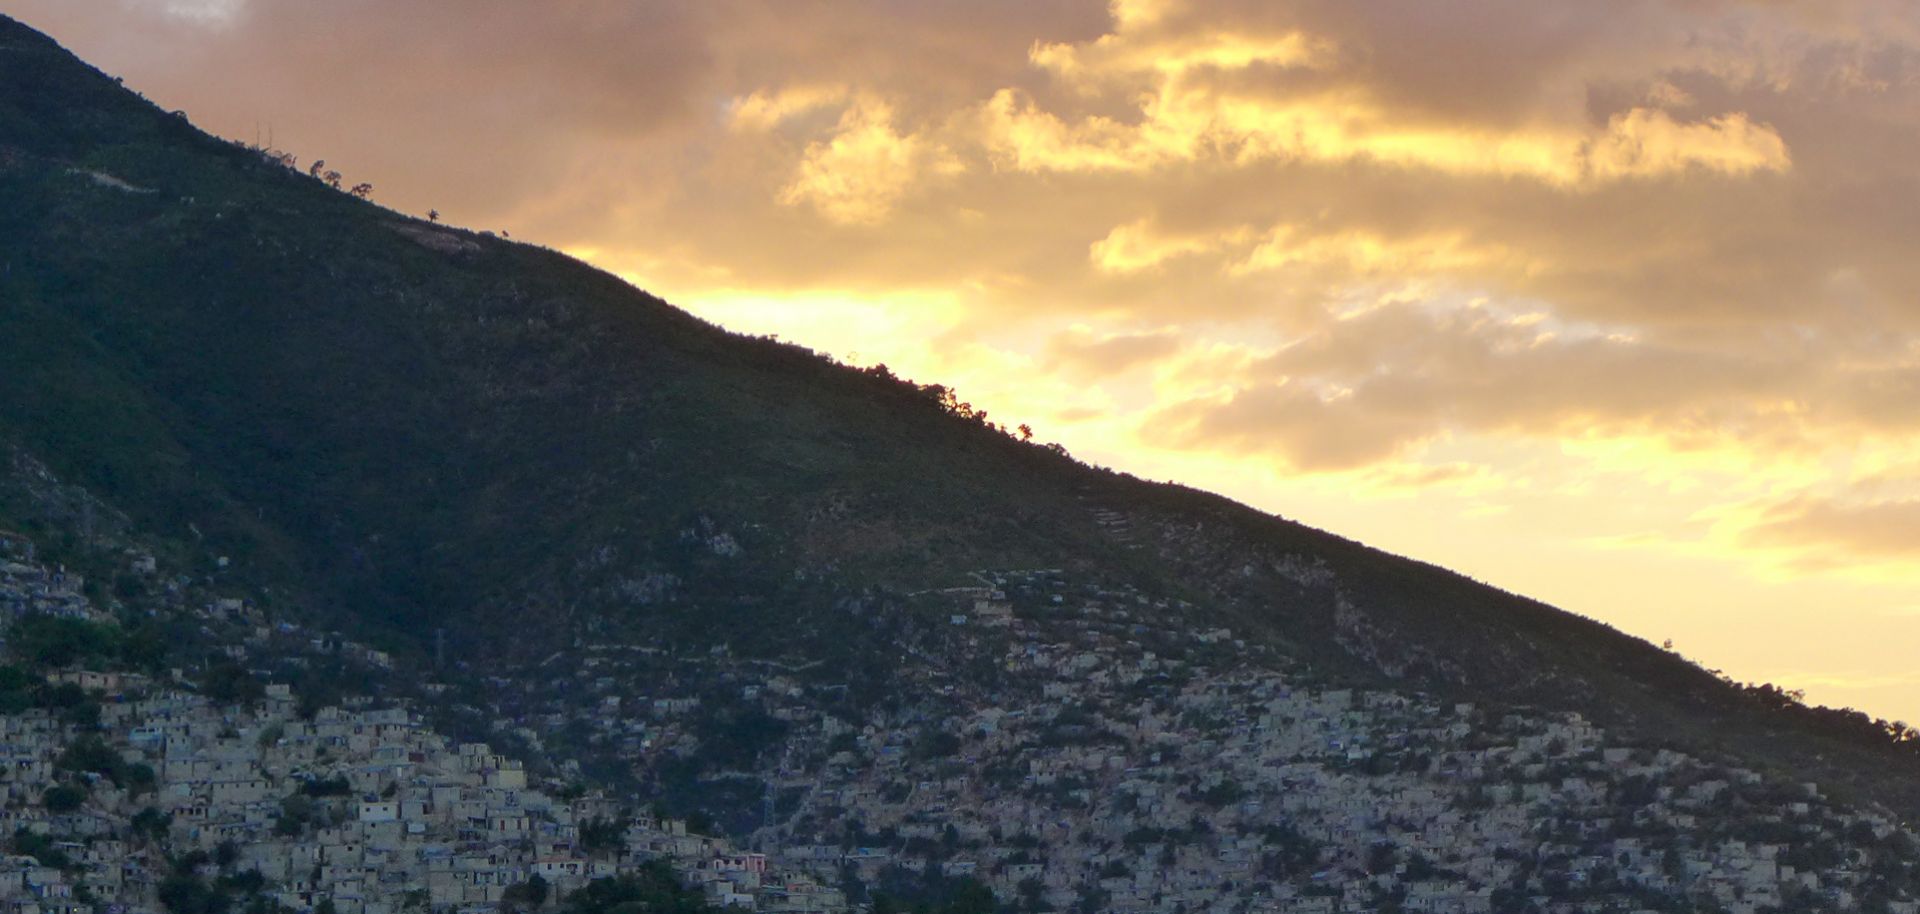 The slums of Haiti's capital, Port-au-Prince, stretch along a hillside.